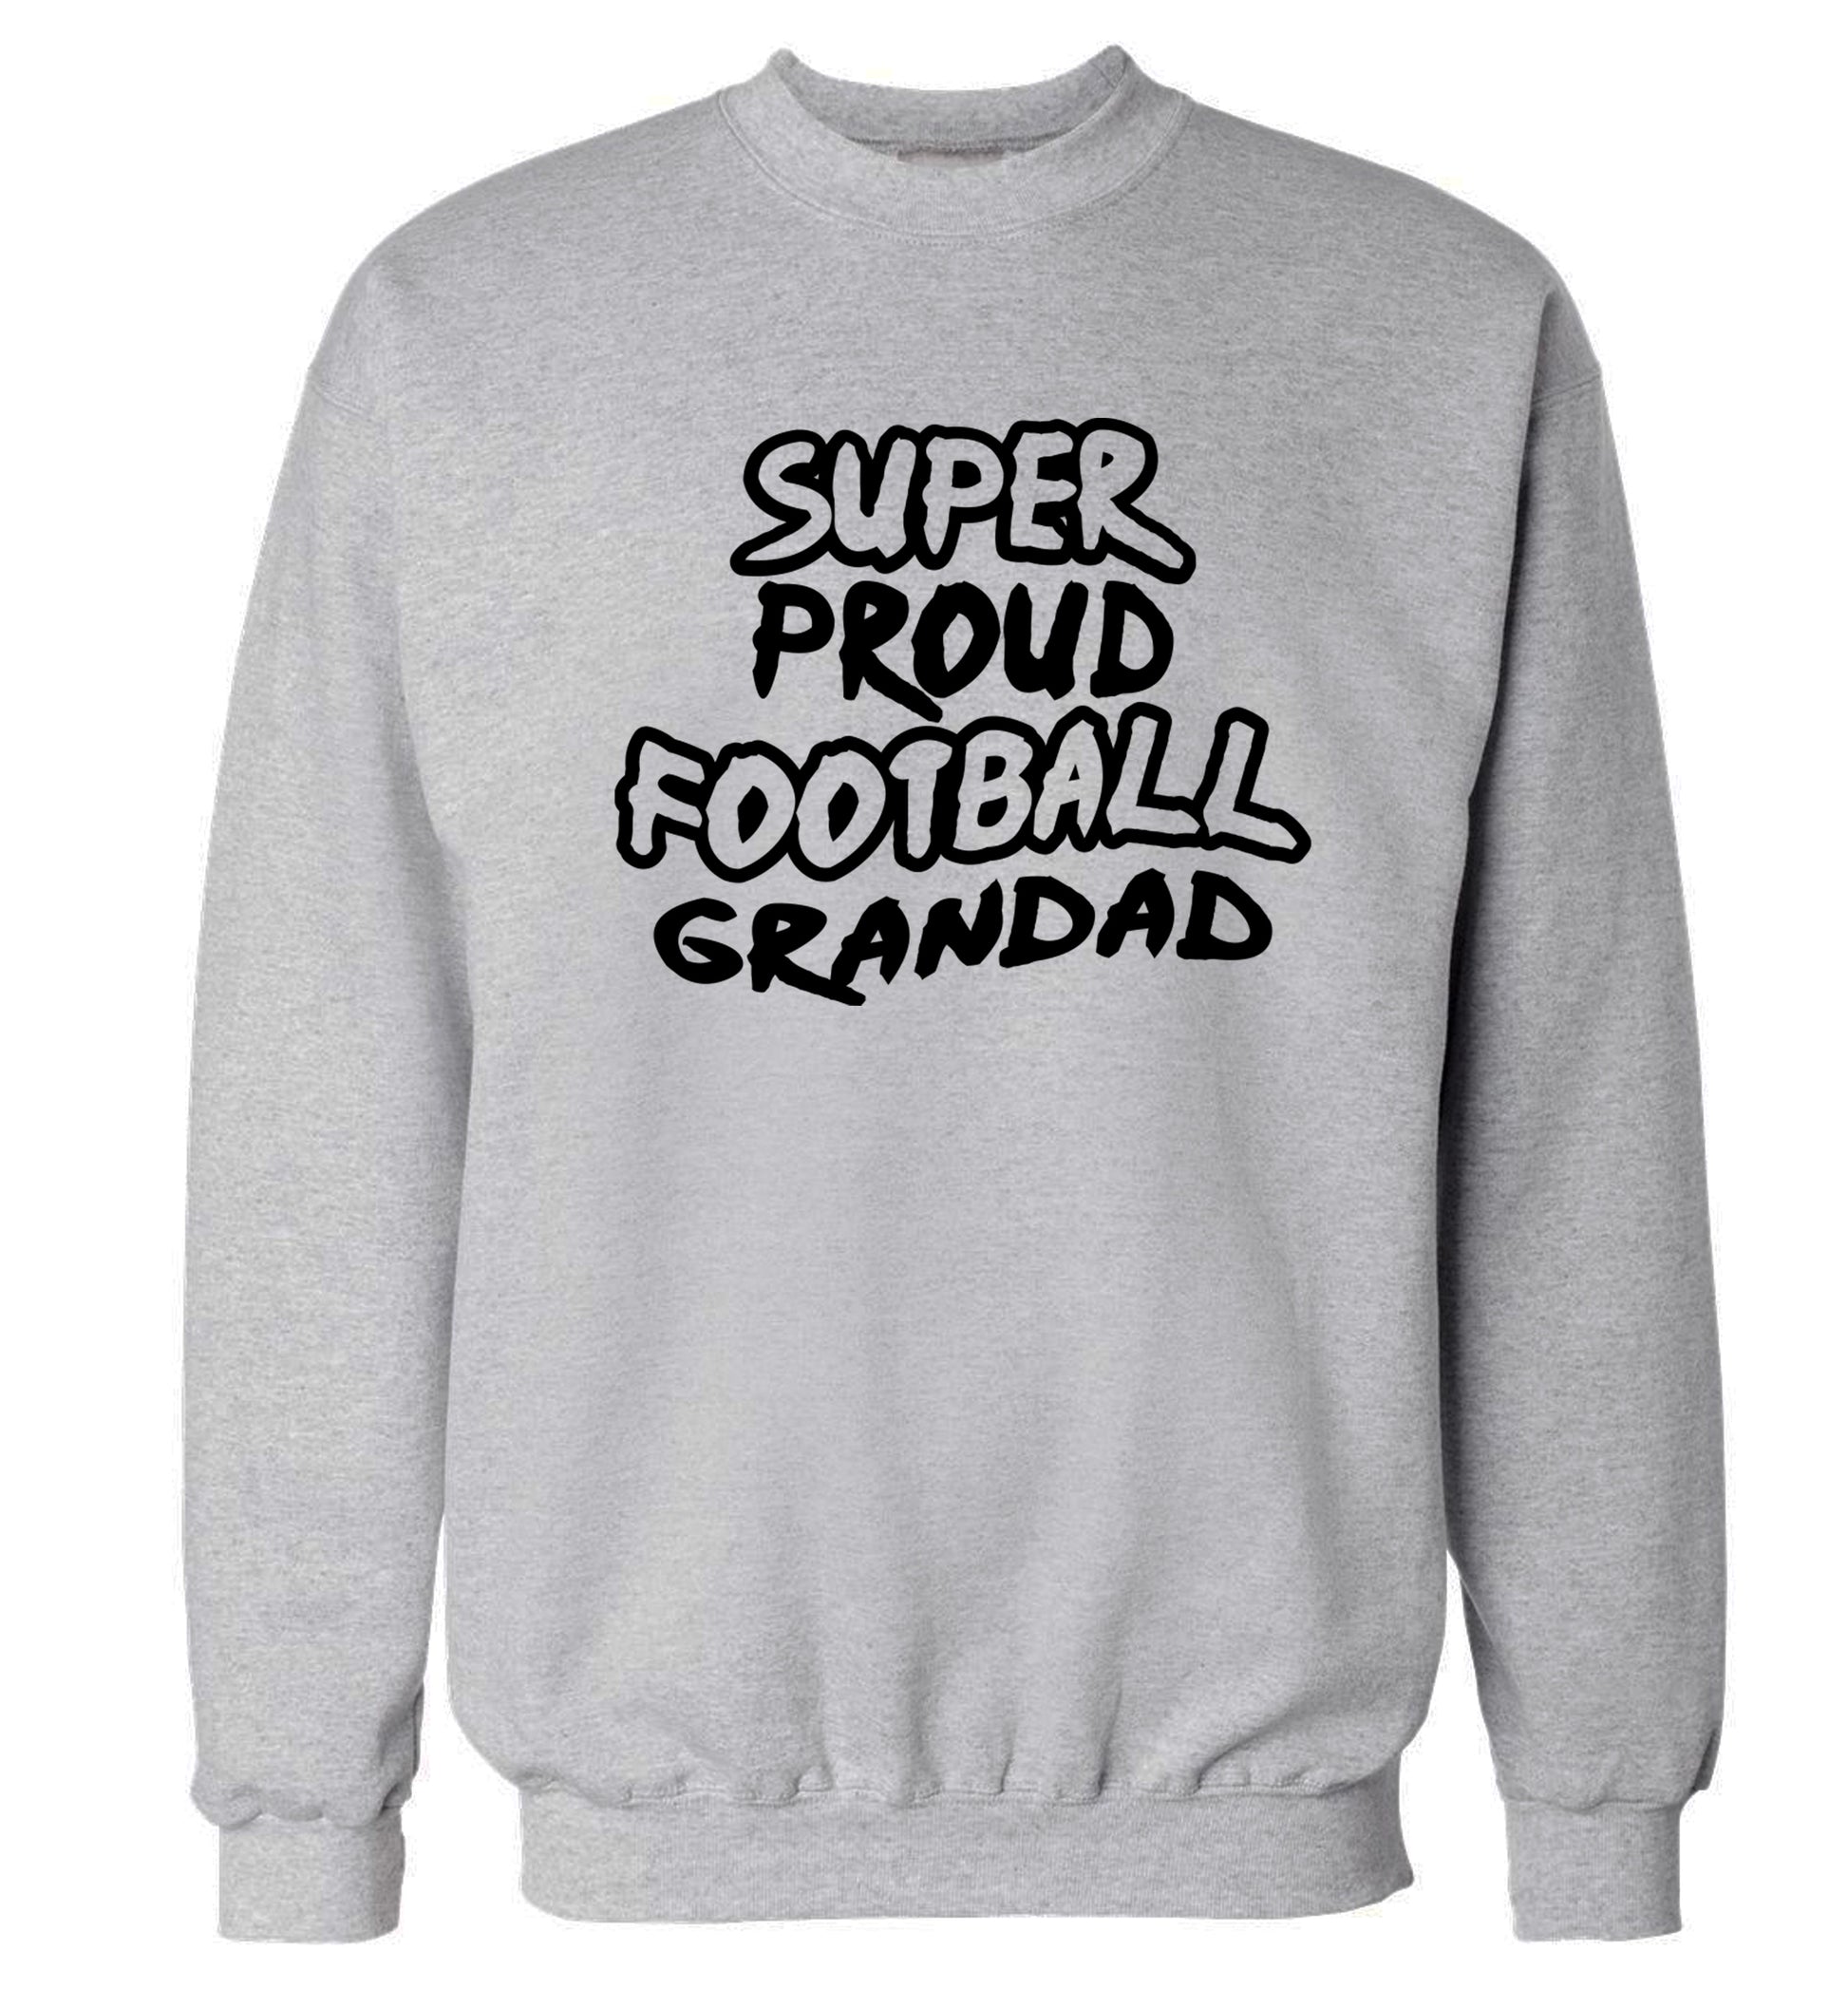 Super proud football grandad Adult's unisexgrey Sweater 2XL